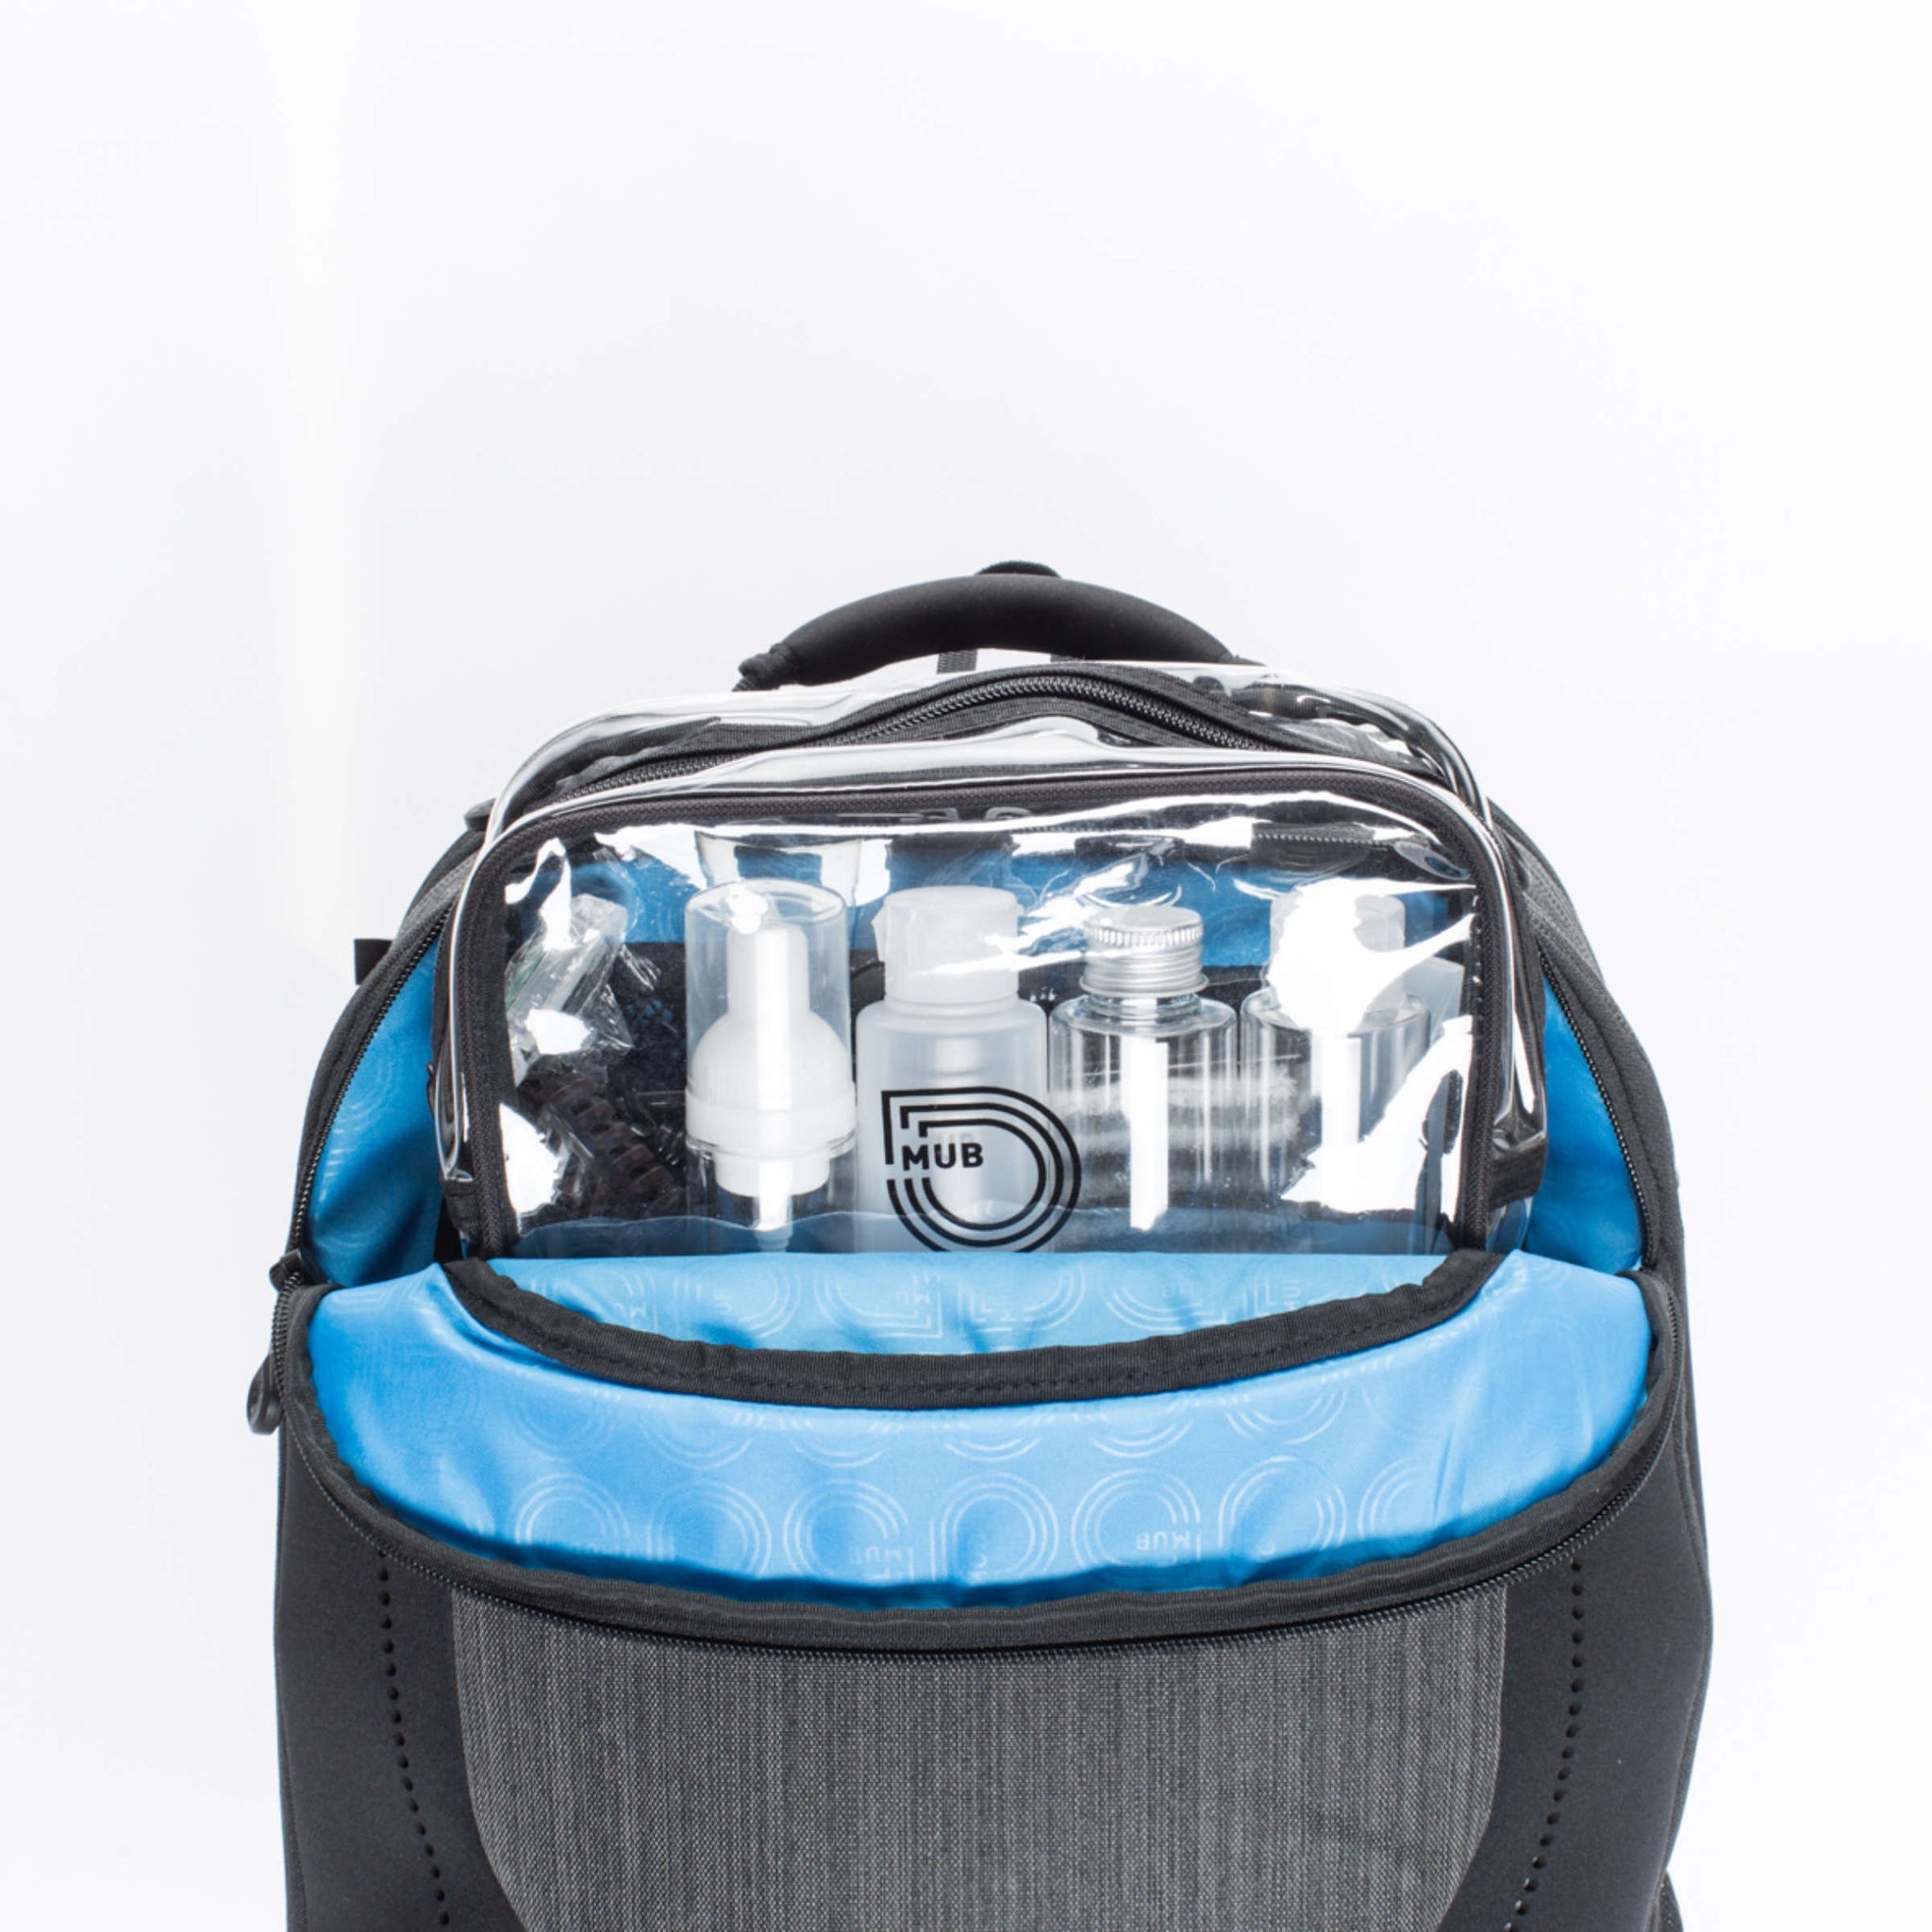 MUB TRAVELER REGULAR Black - The BiarritzI Deluxe Travel Backpack for Men